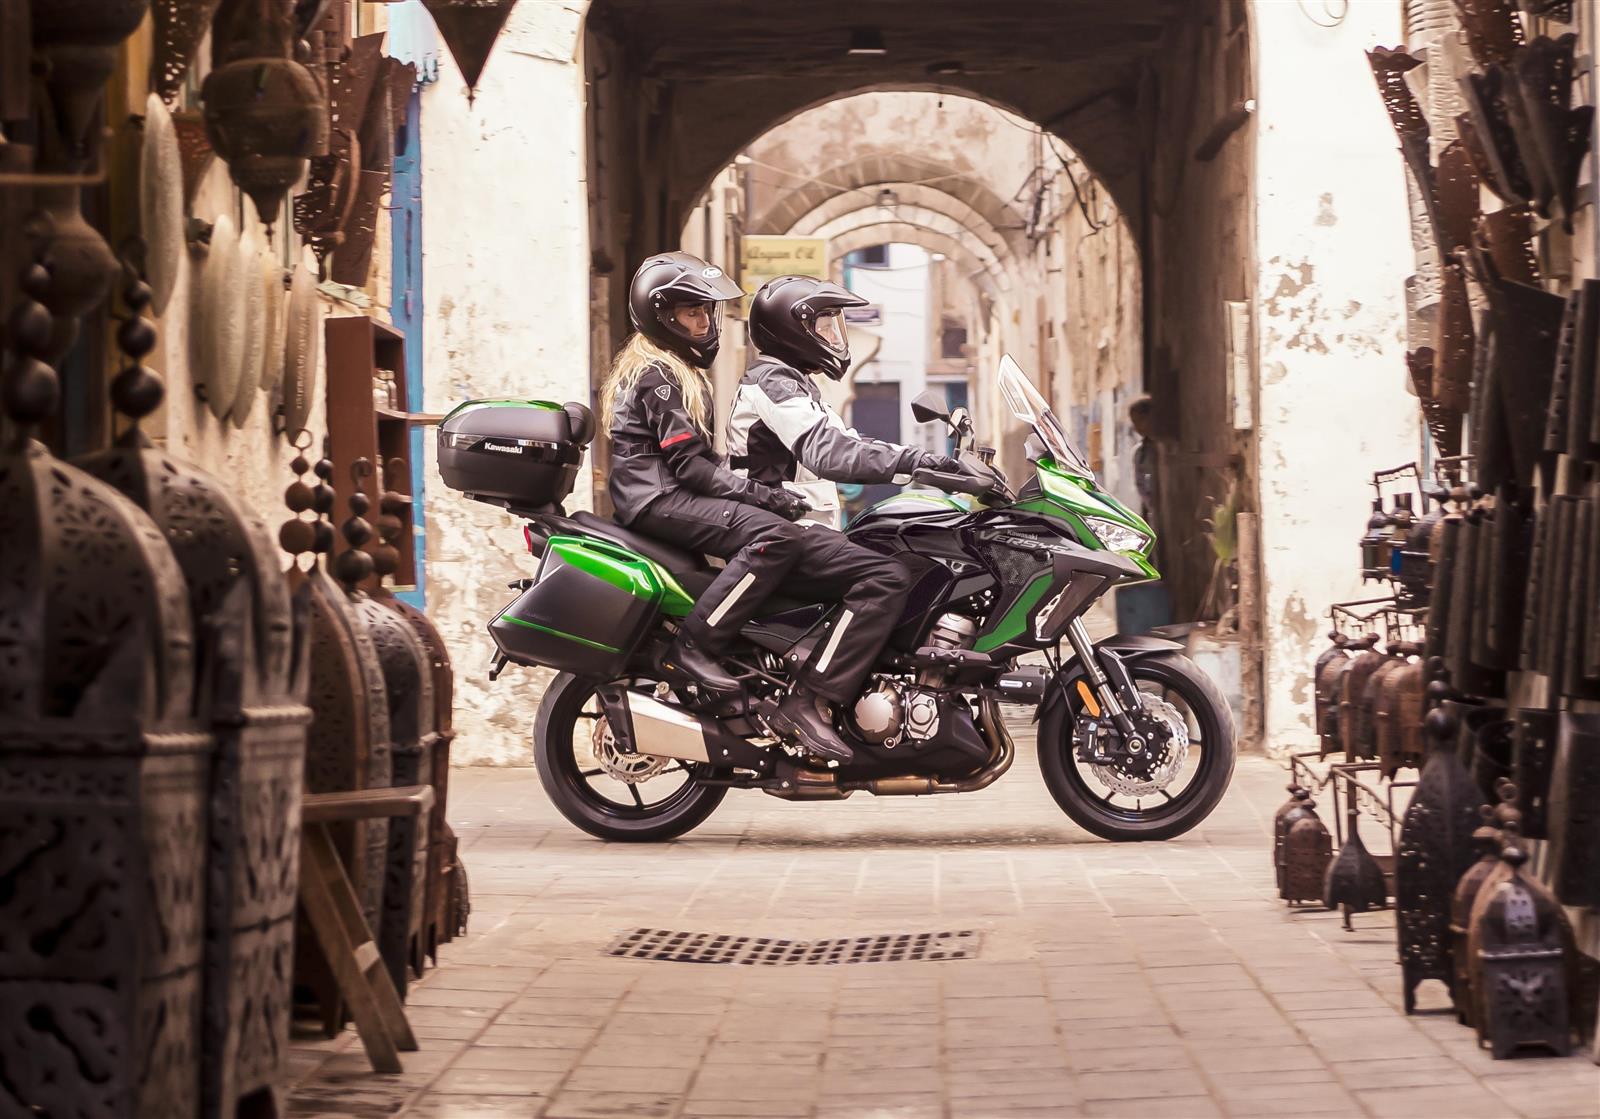 Rider and pillion on the Kawasaki Versys 1000 riding through a narrow street